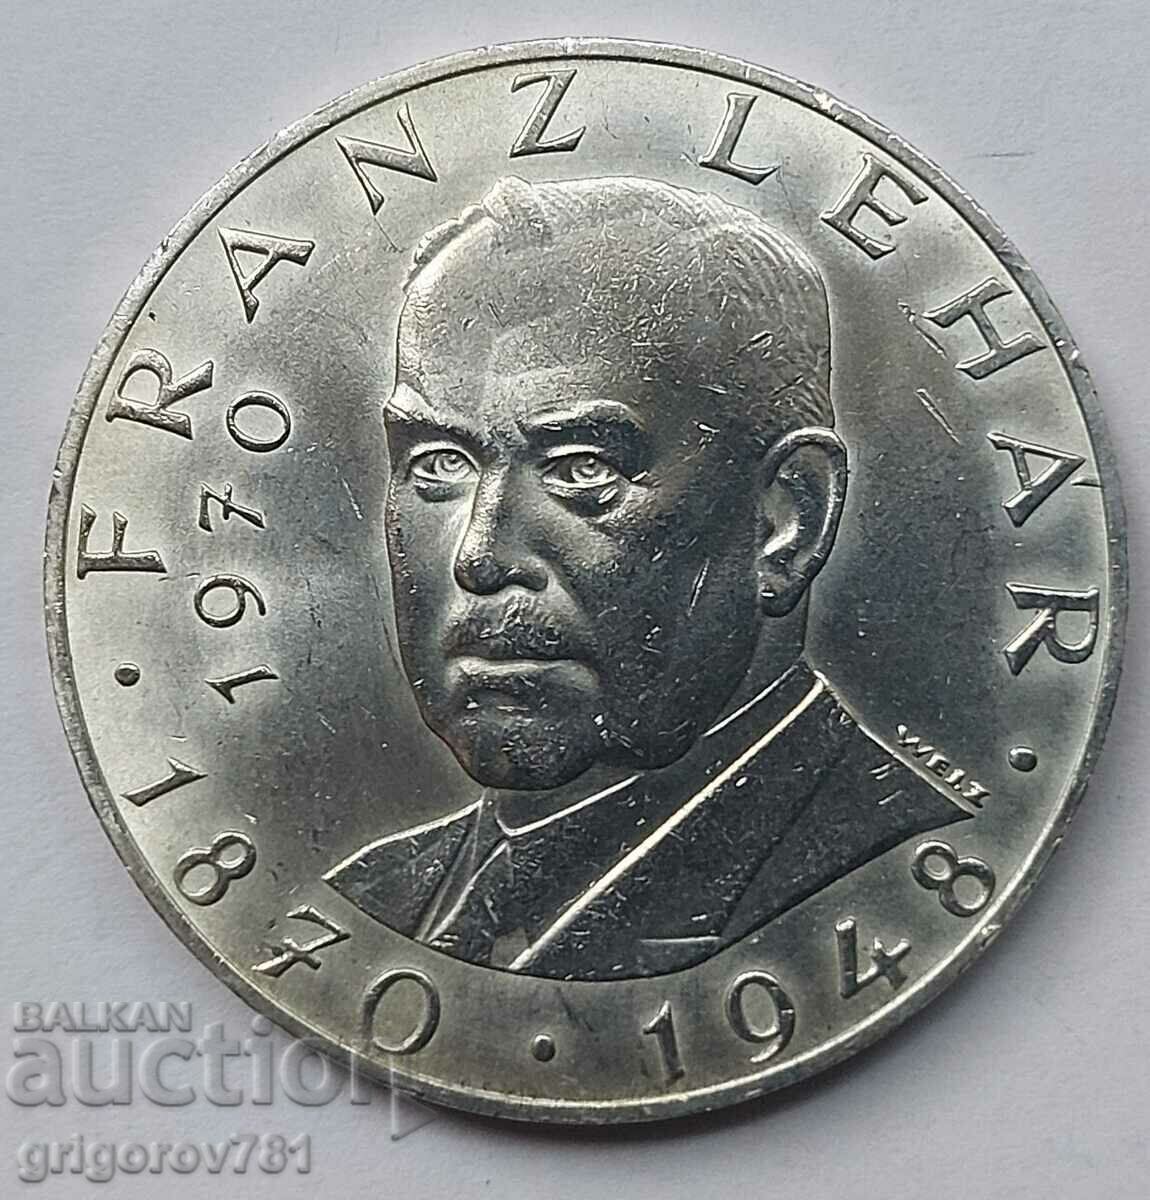 25 Shillings Silver Austria 1970 - Silver Coin #33